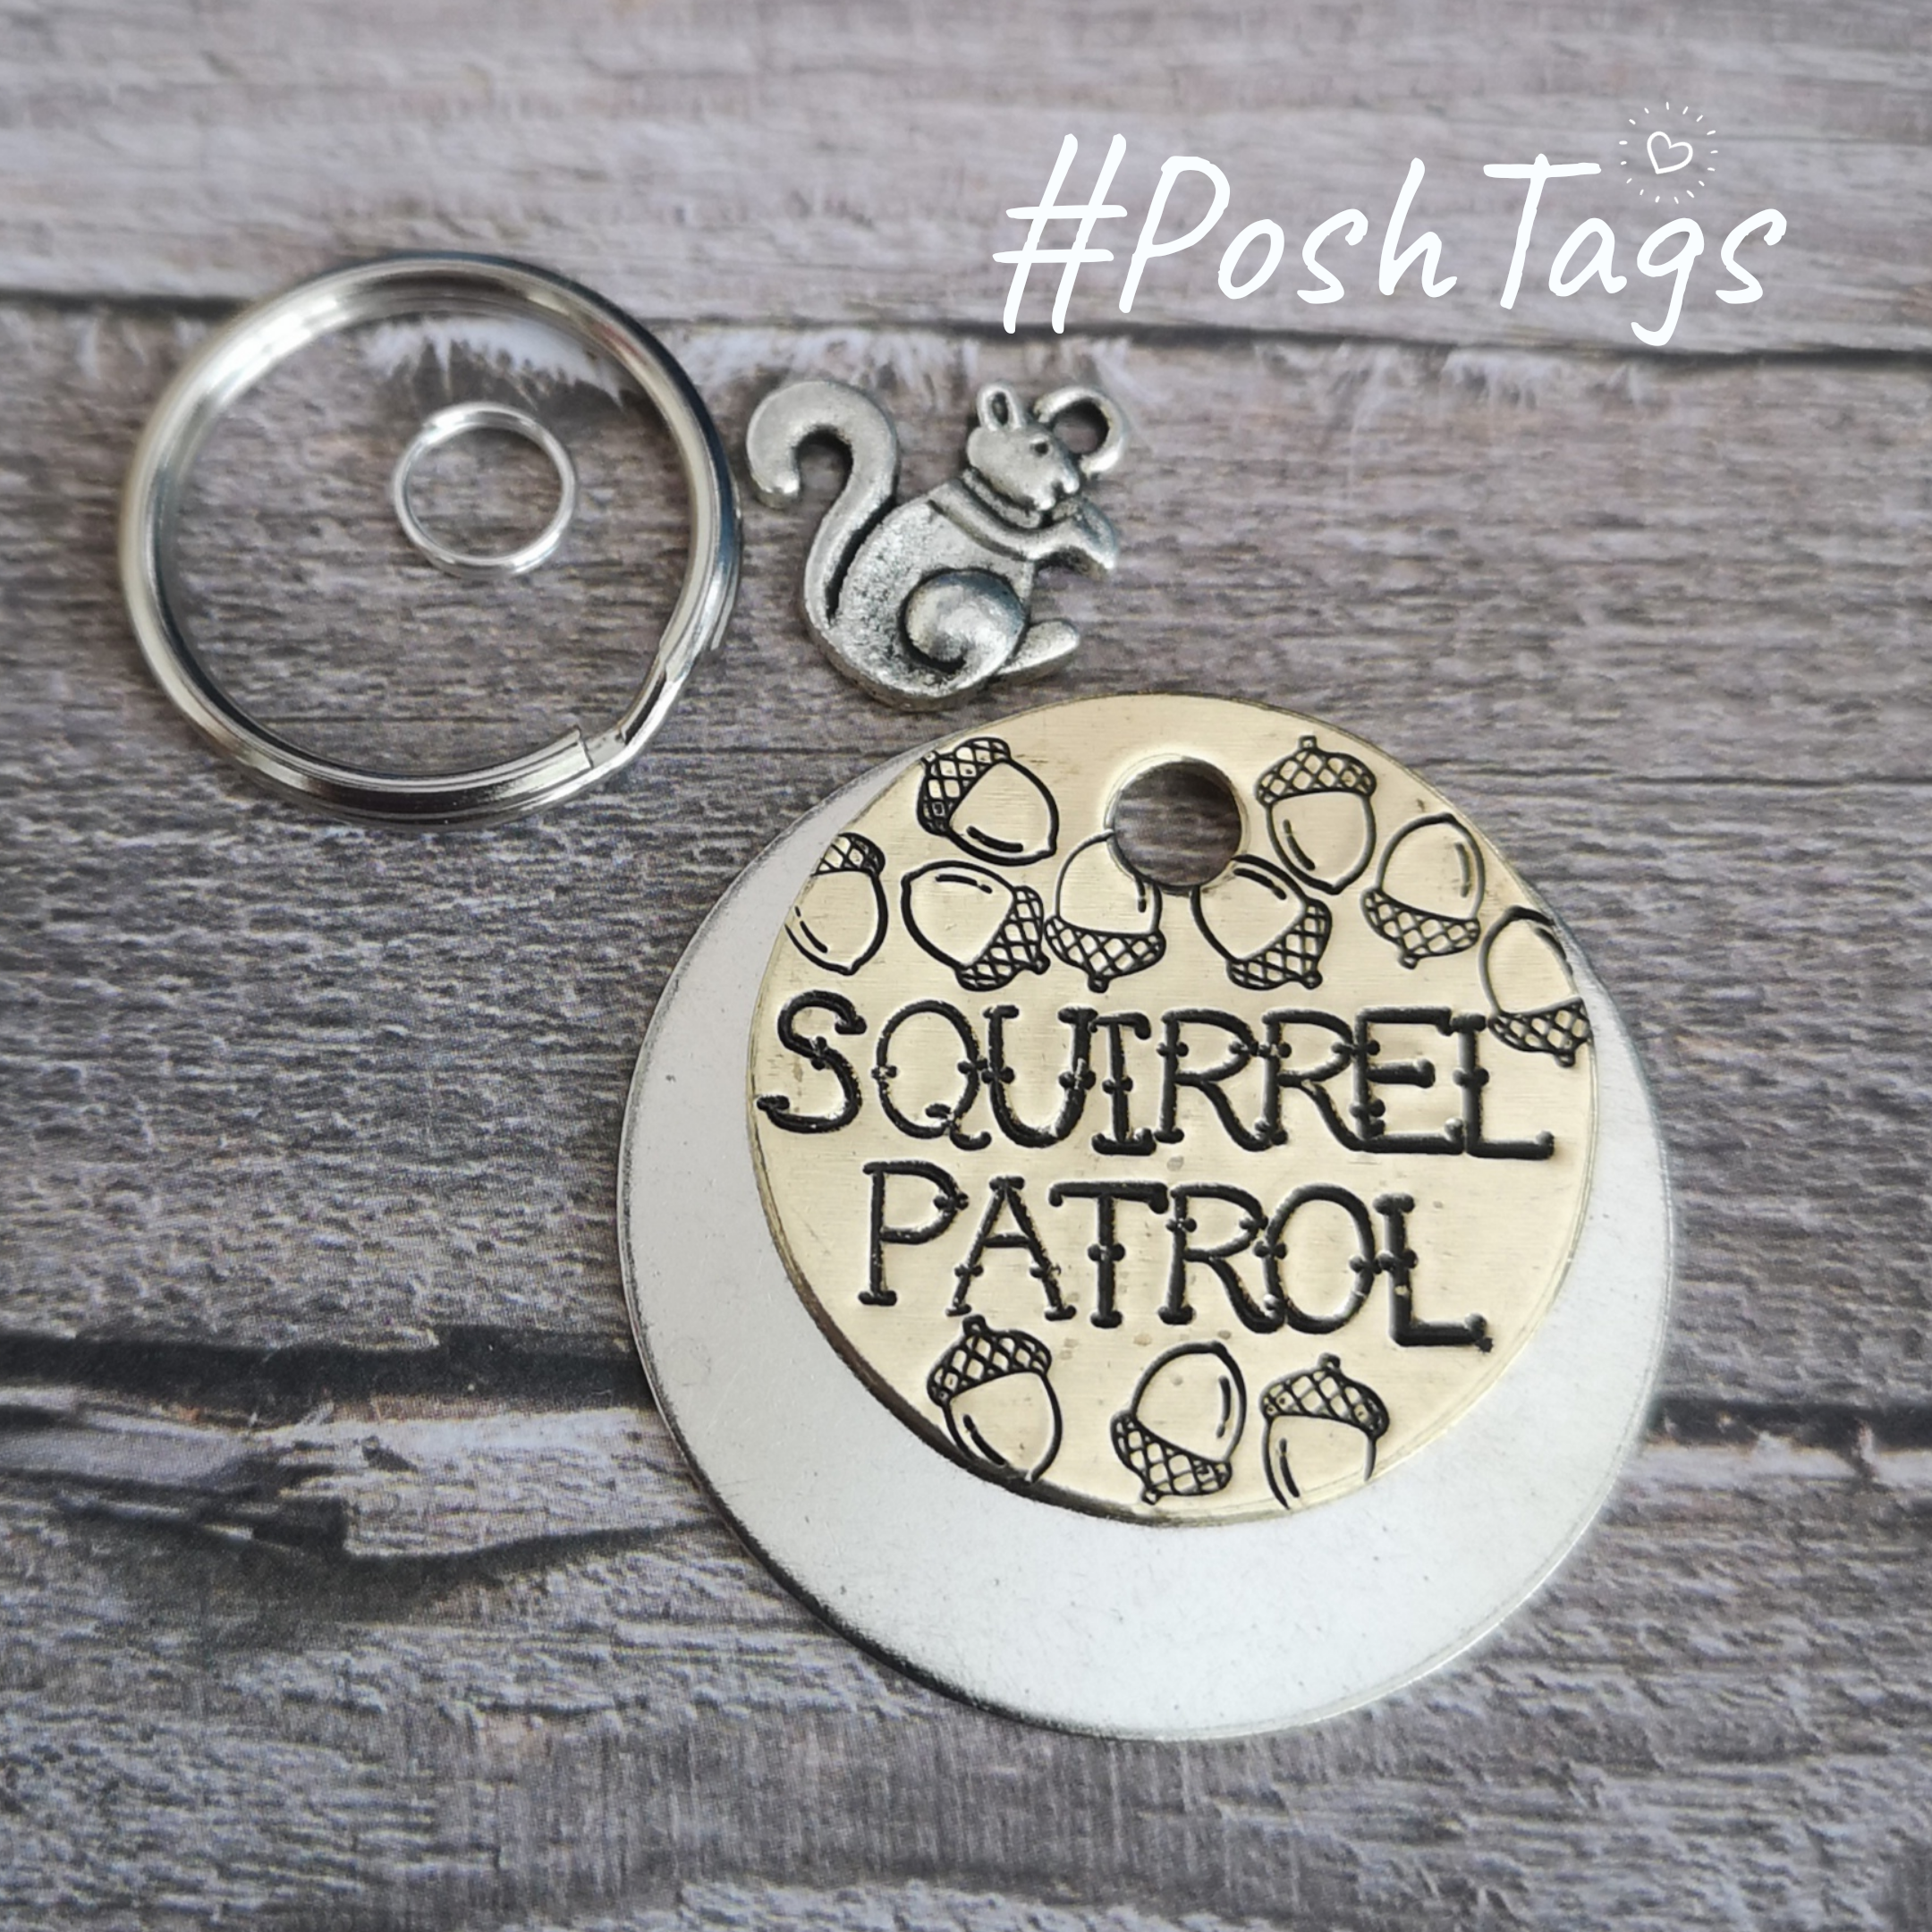 Squirrel patrol - funny cat dog tag pet tag ID #PoshTags